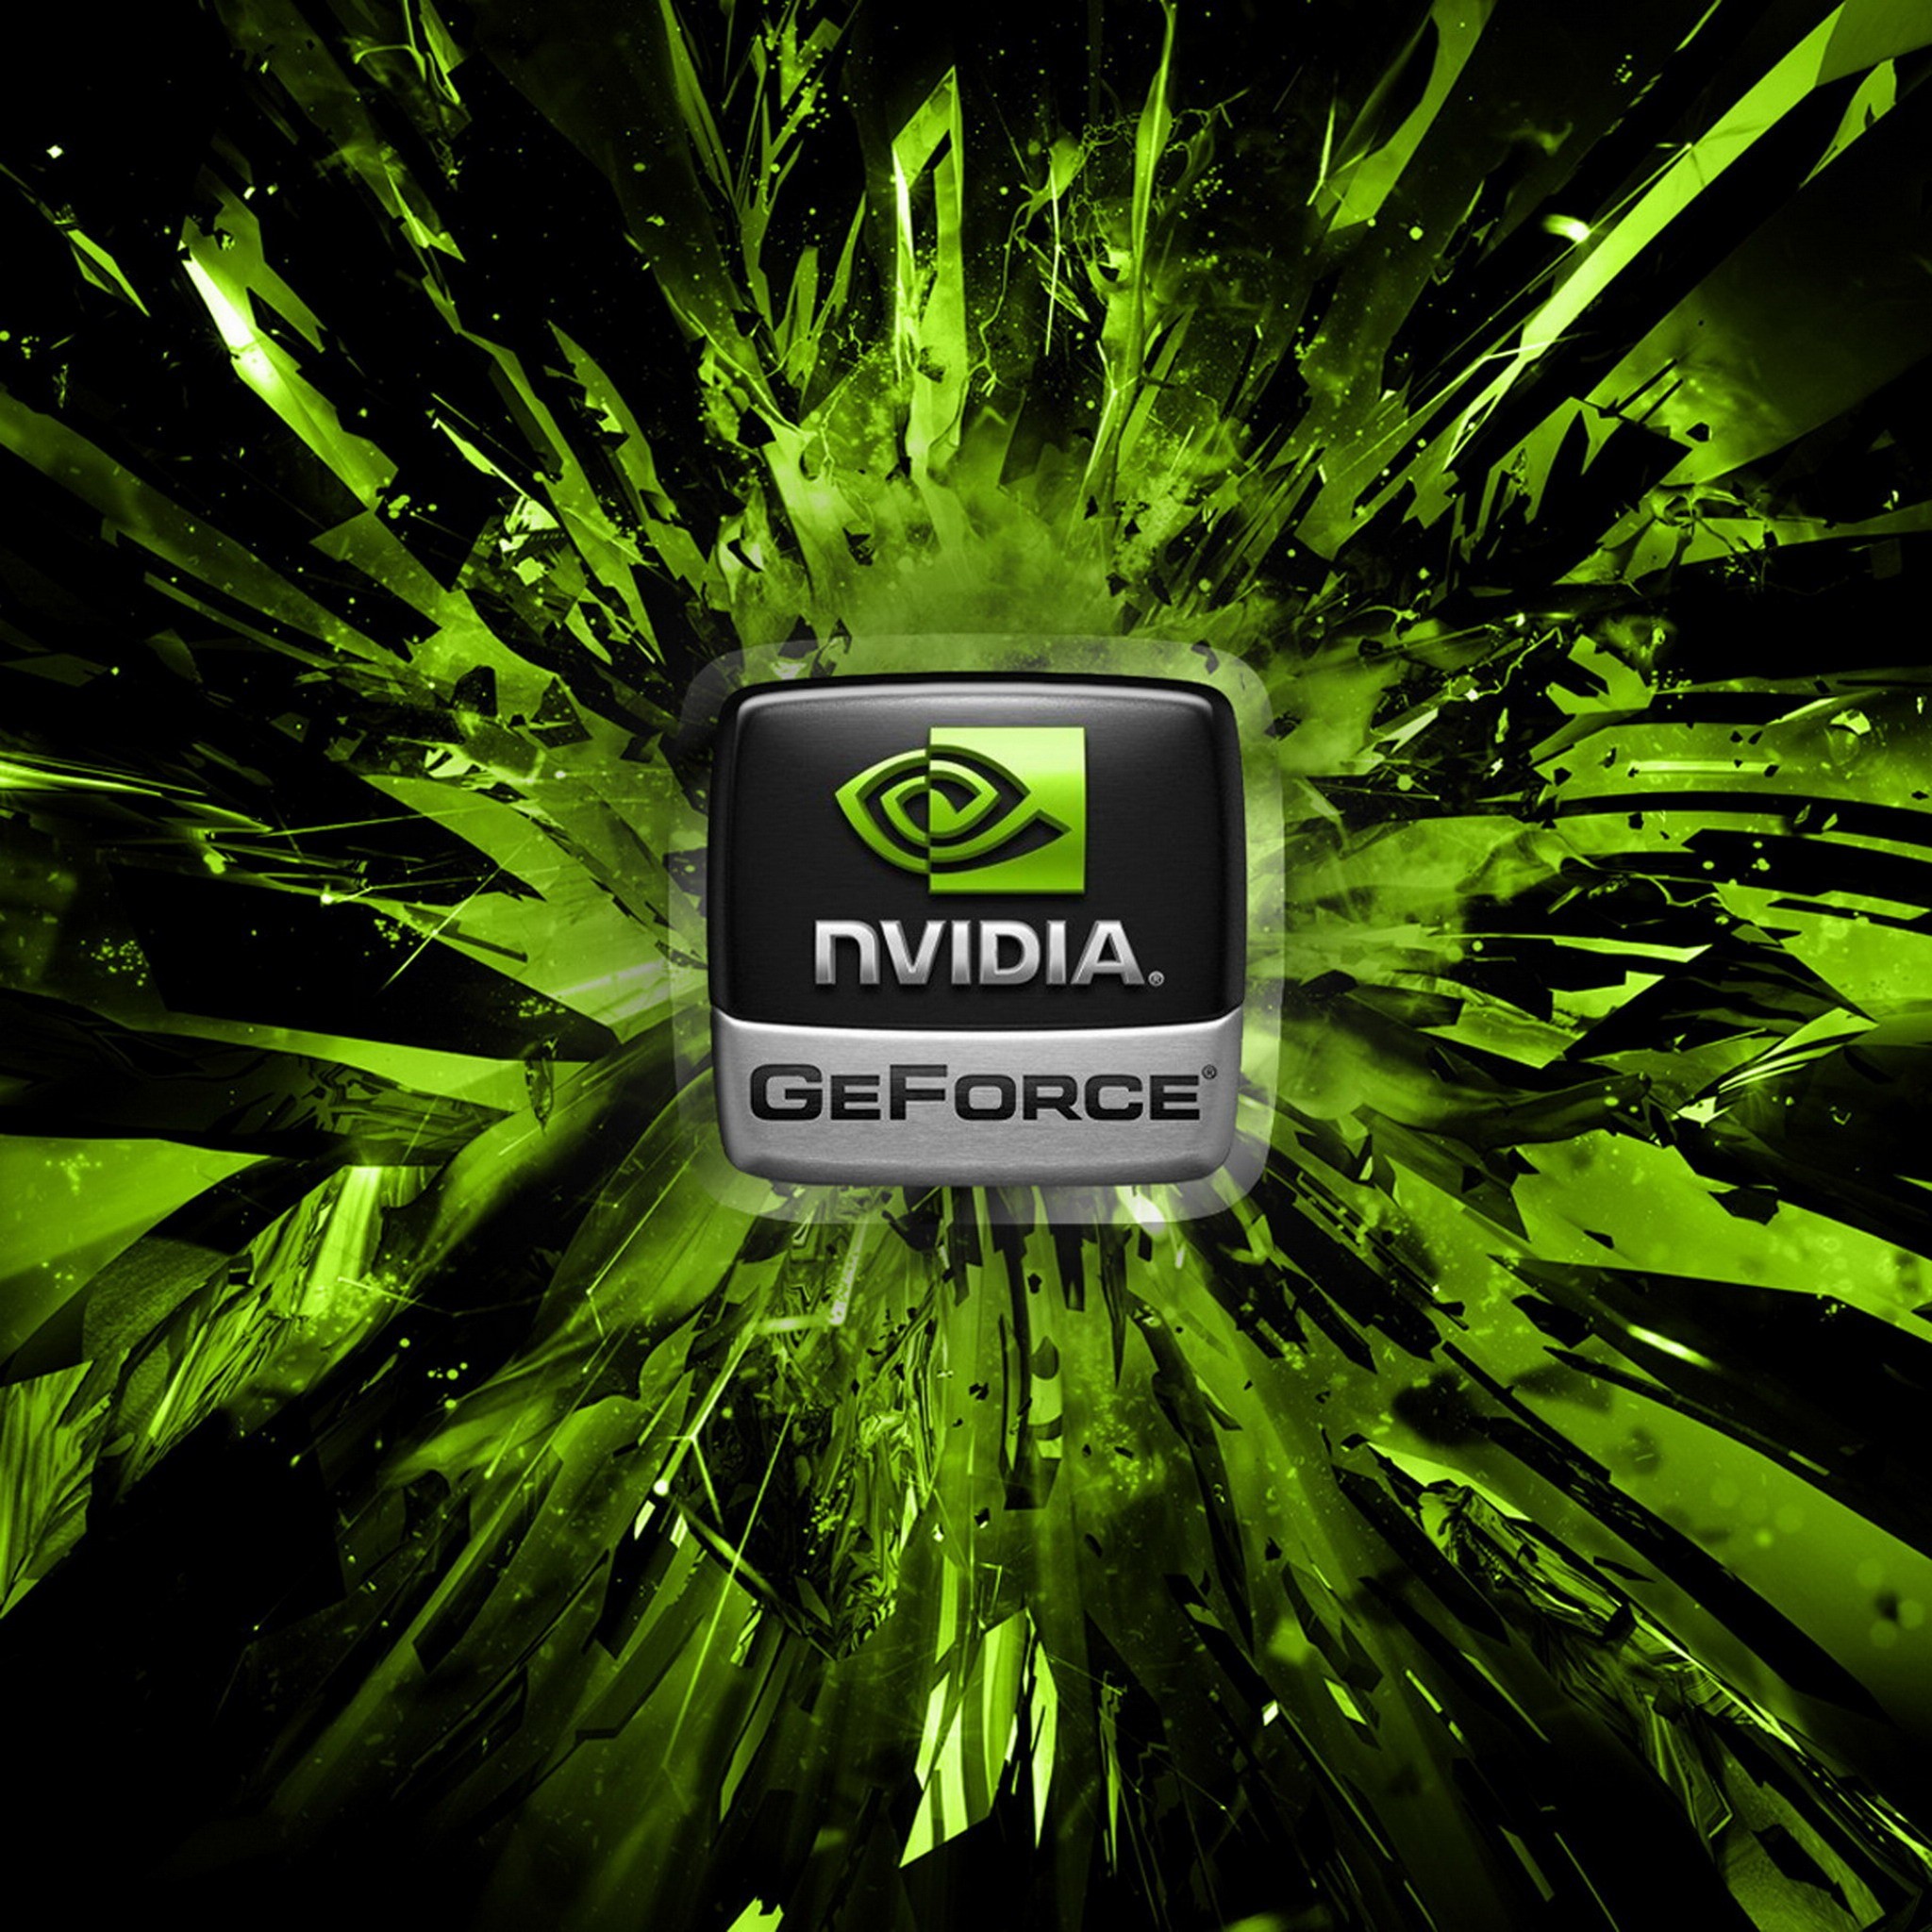 Nvidia Geforce Ipad タブレット壁紙ギャラリー